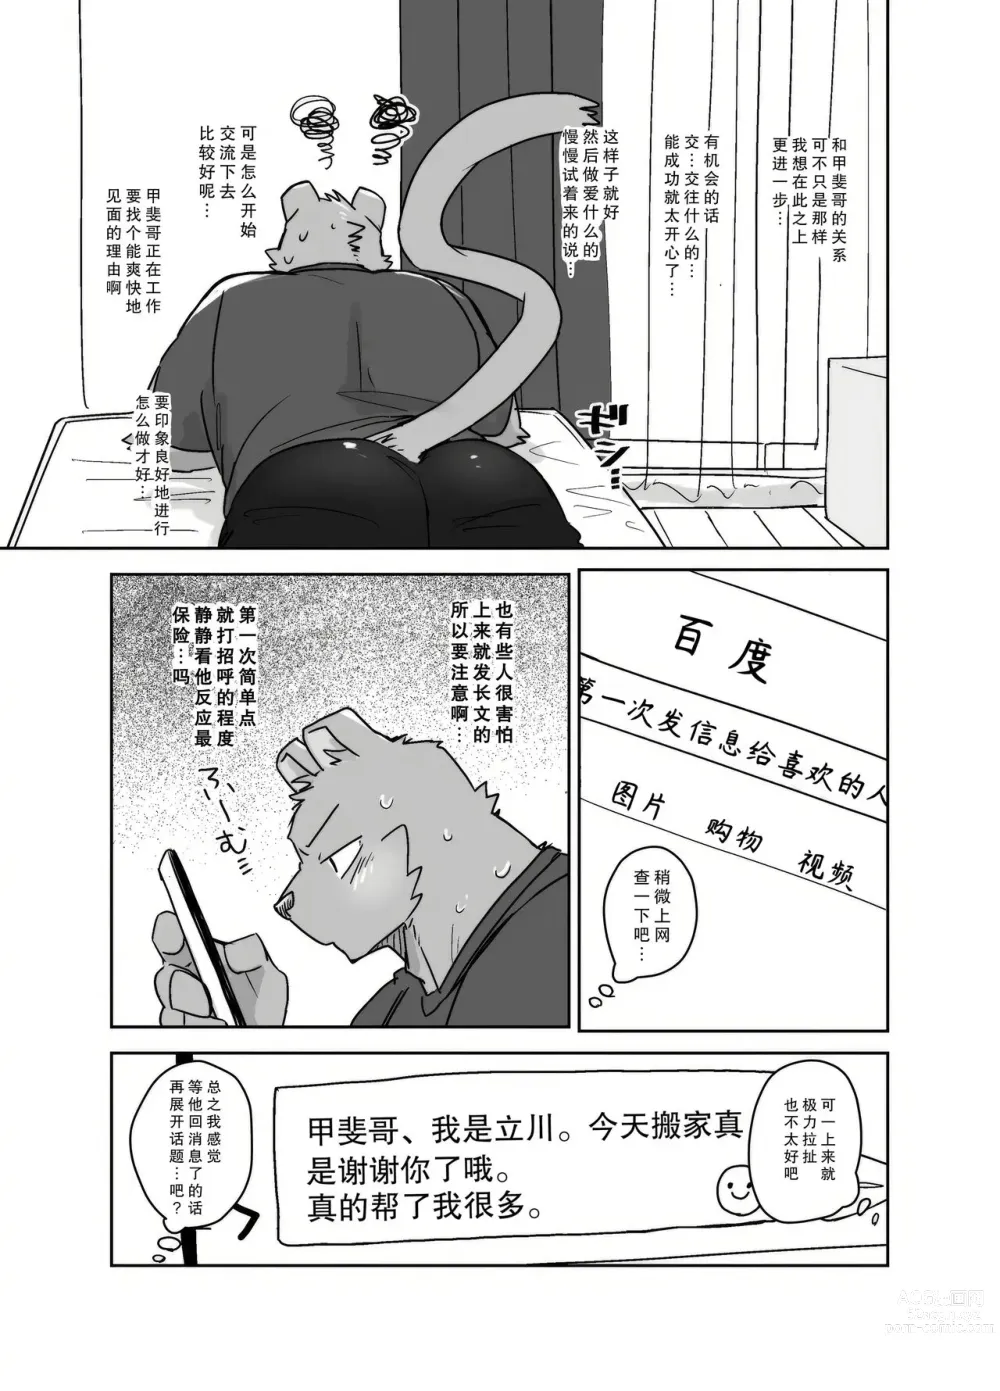 Page 3 of manga 【后续漫画】那一天的夜晚